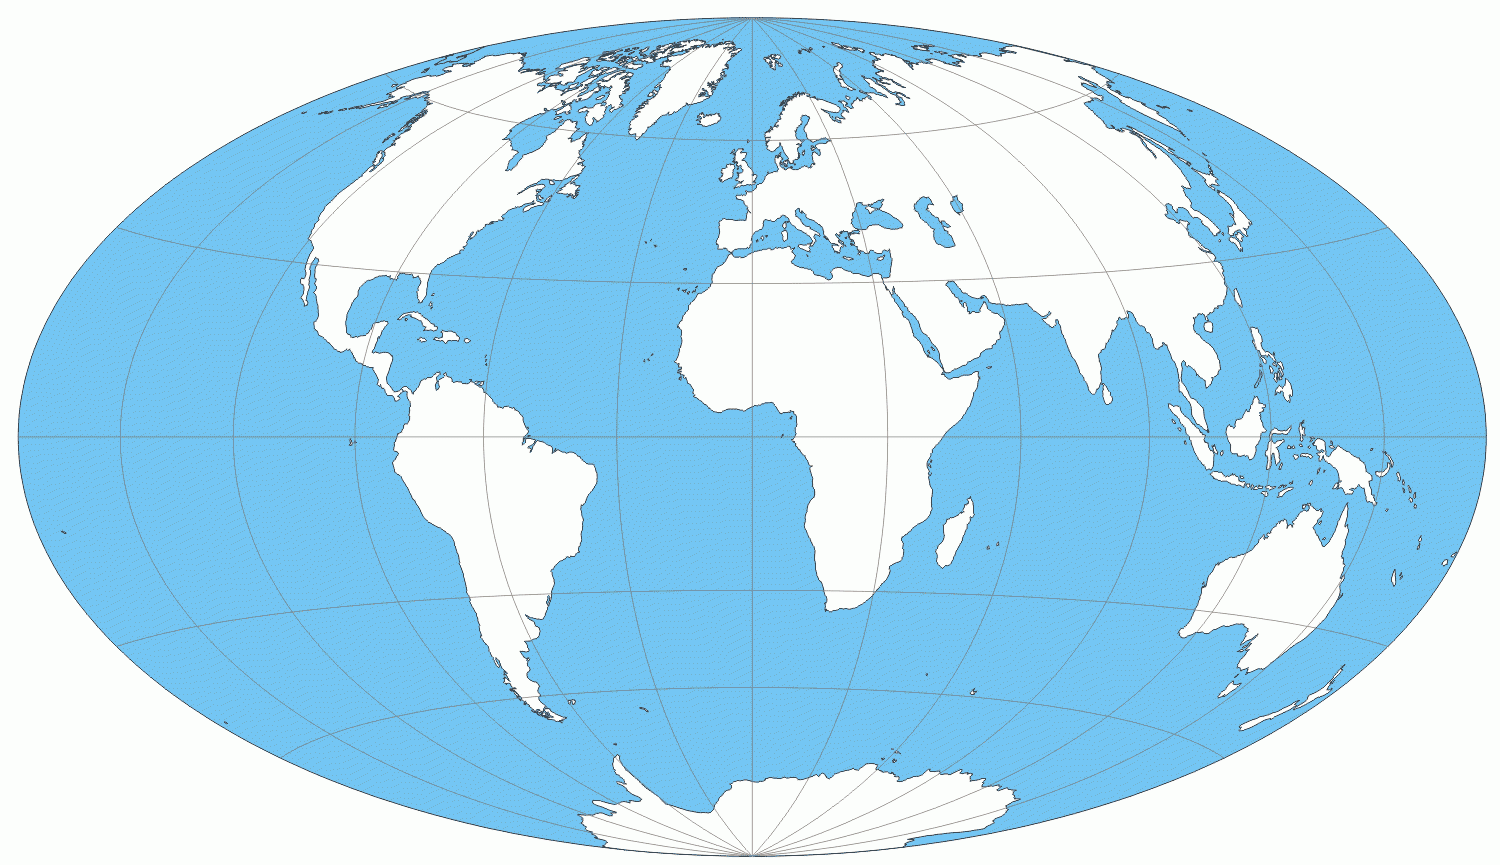 Free Printable World Maps